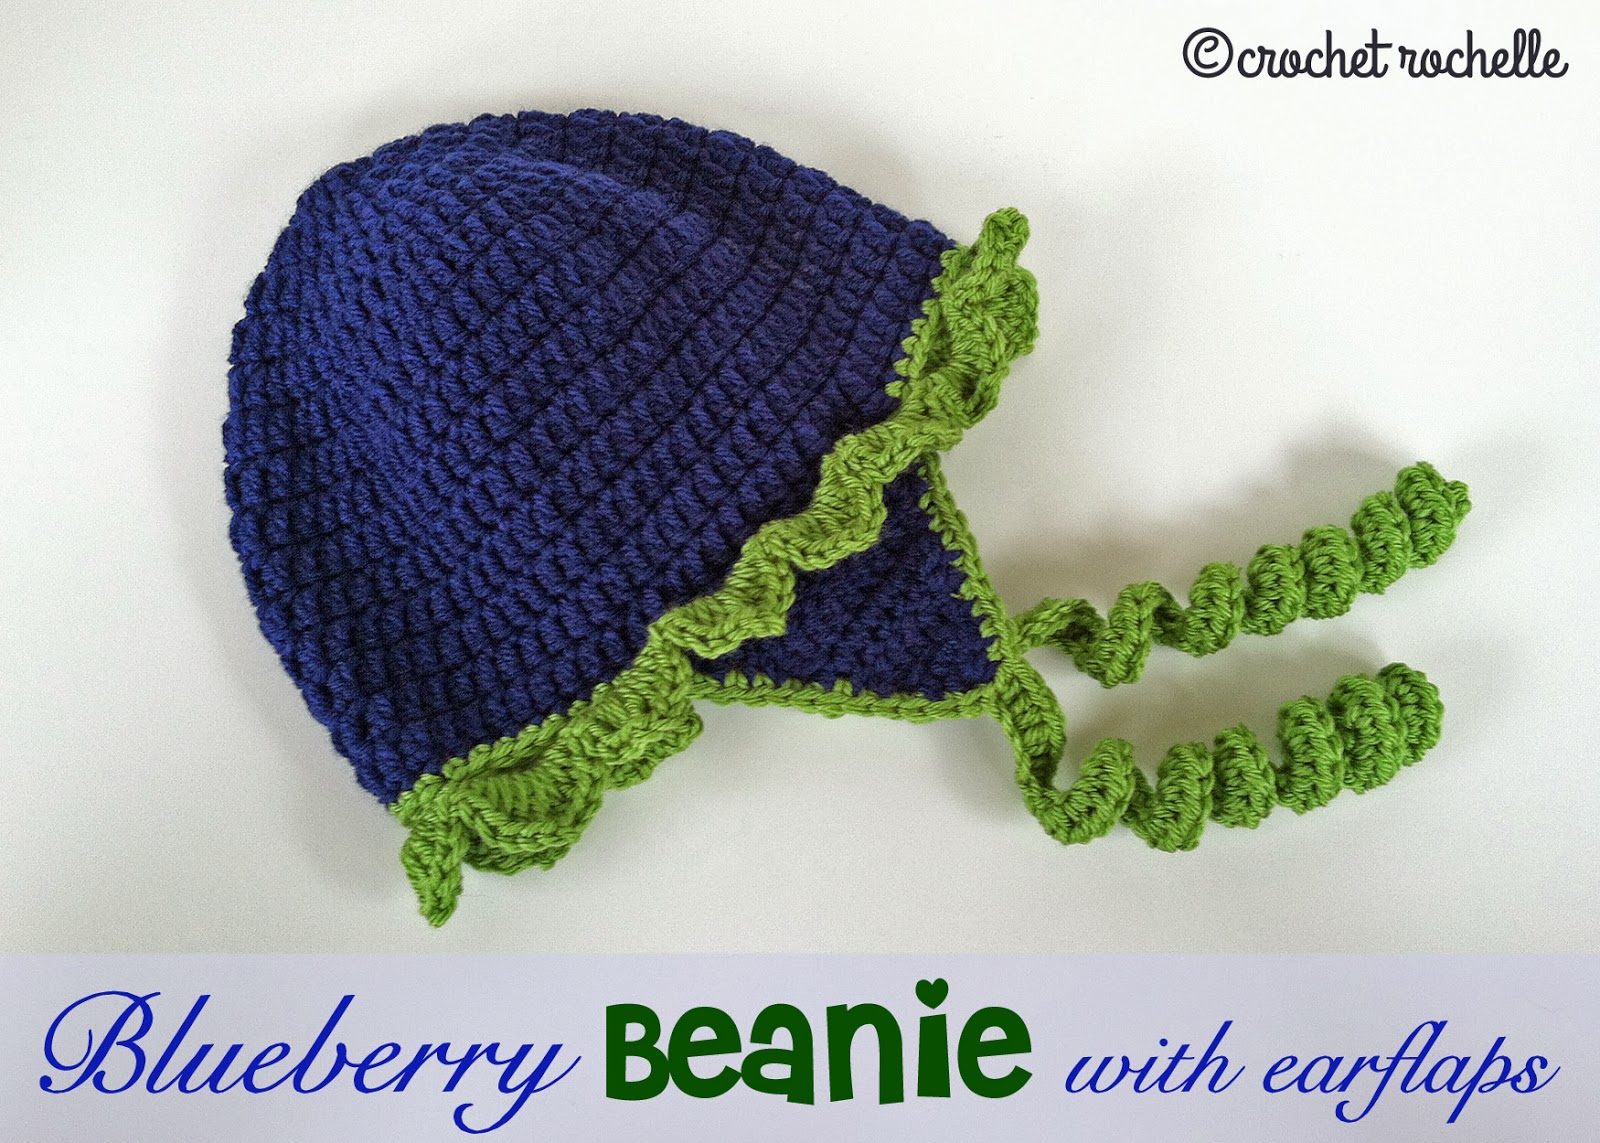 Crochet Rochelle: Blueberry Beanie